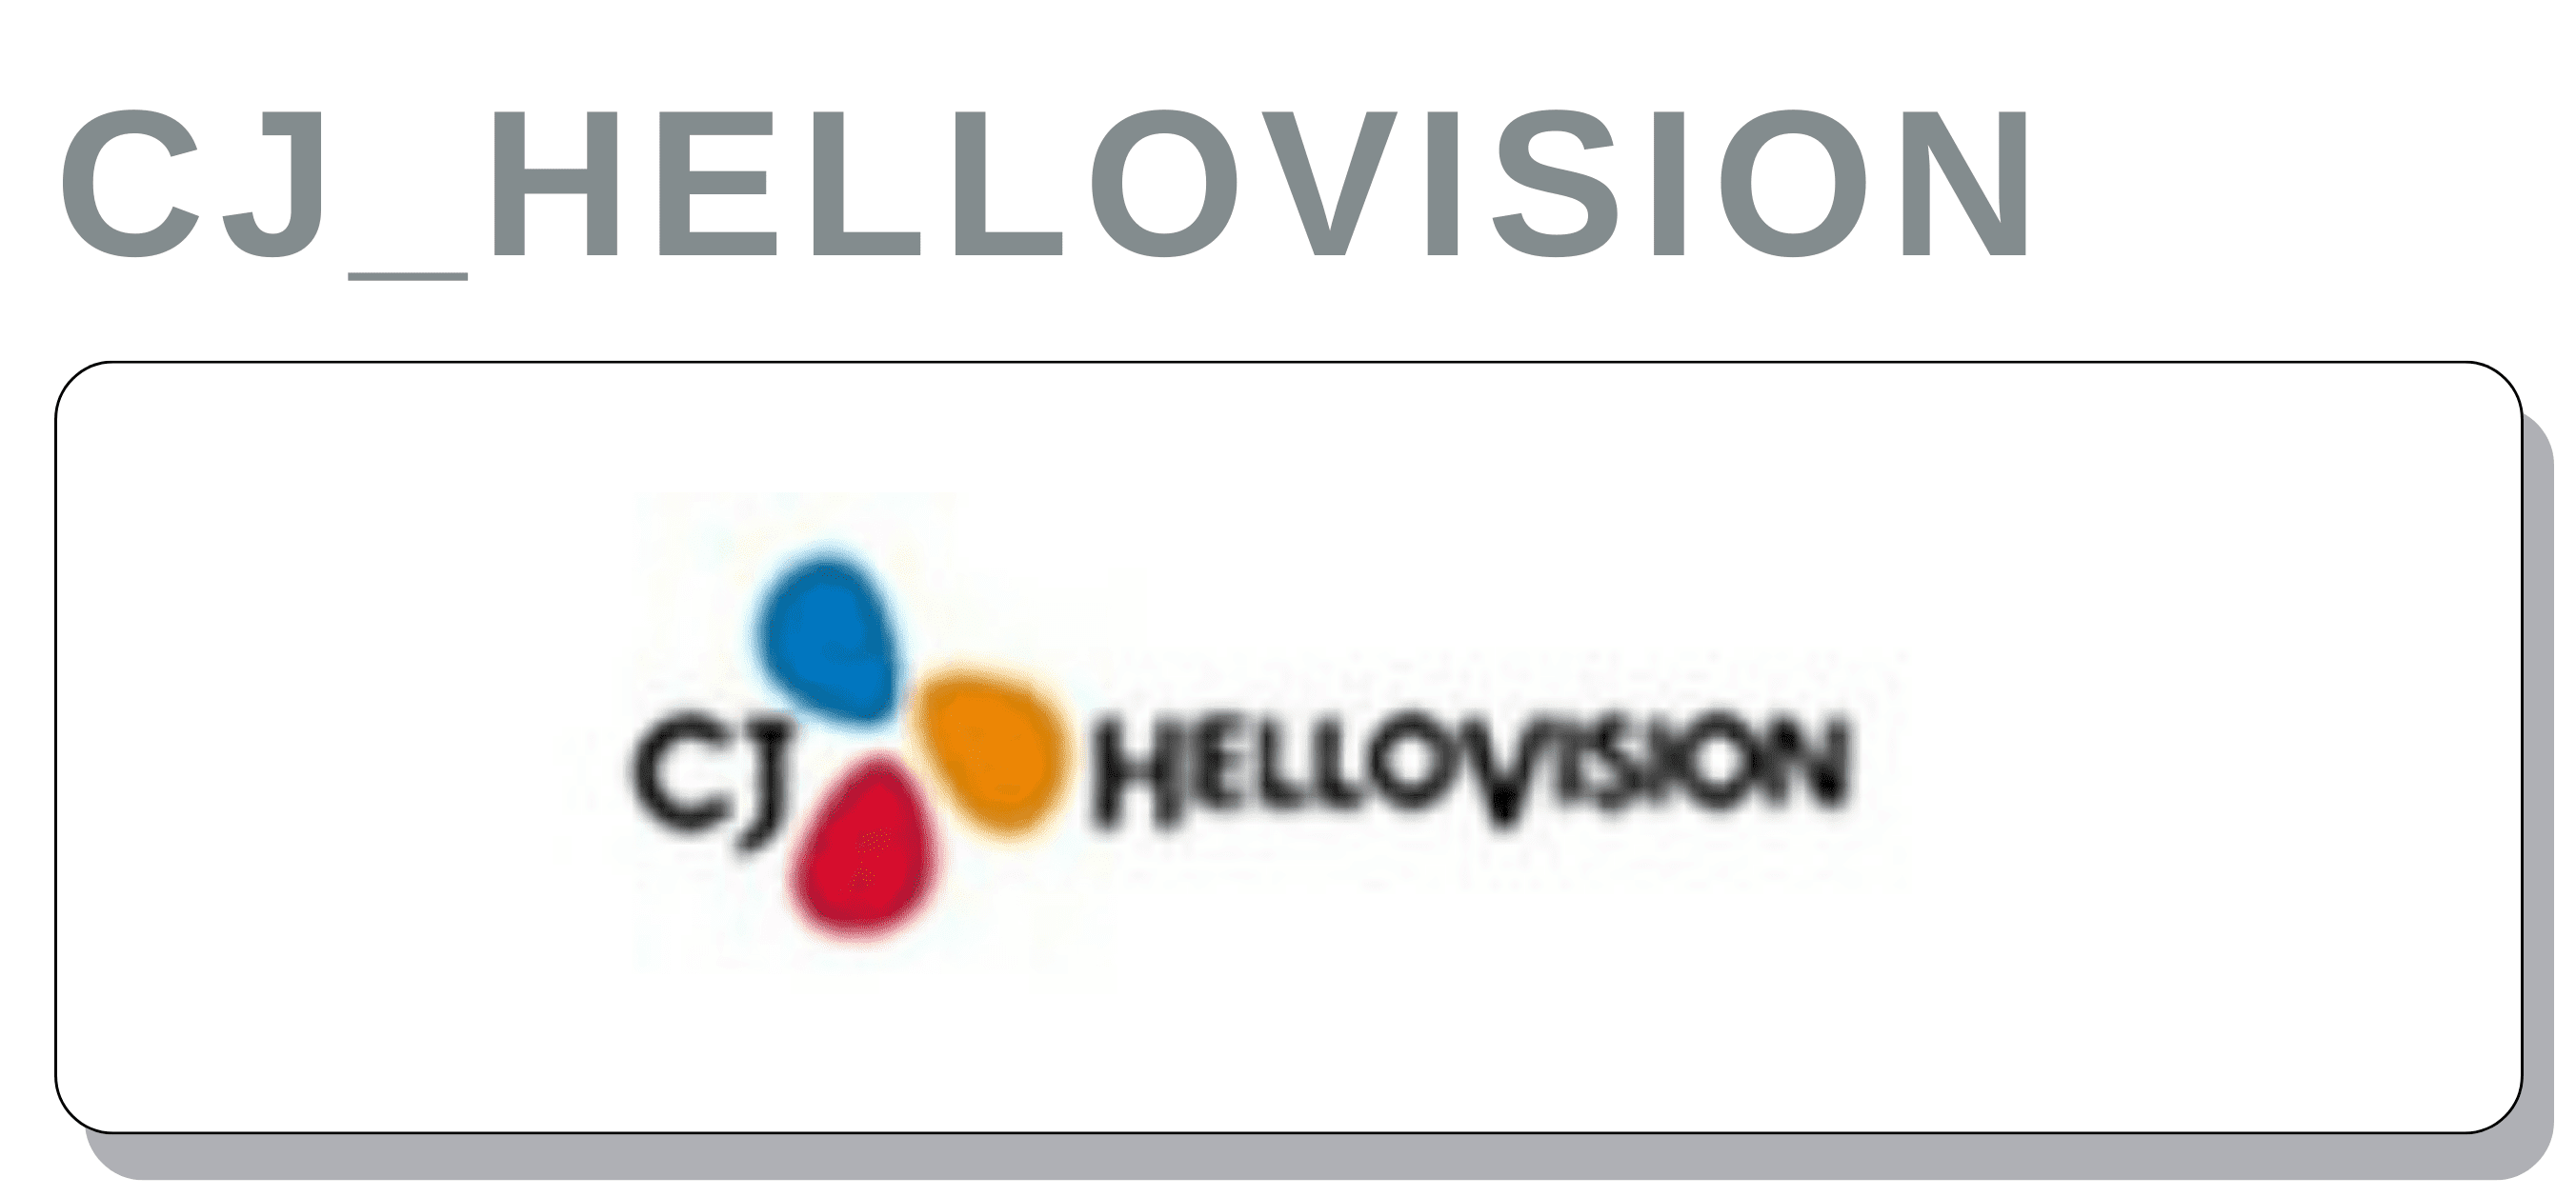 CJhellovision